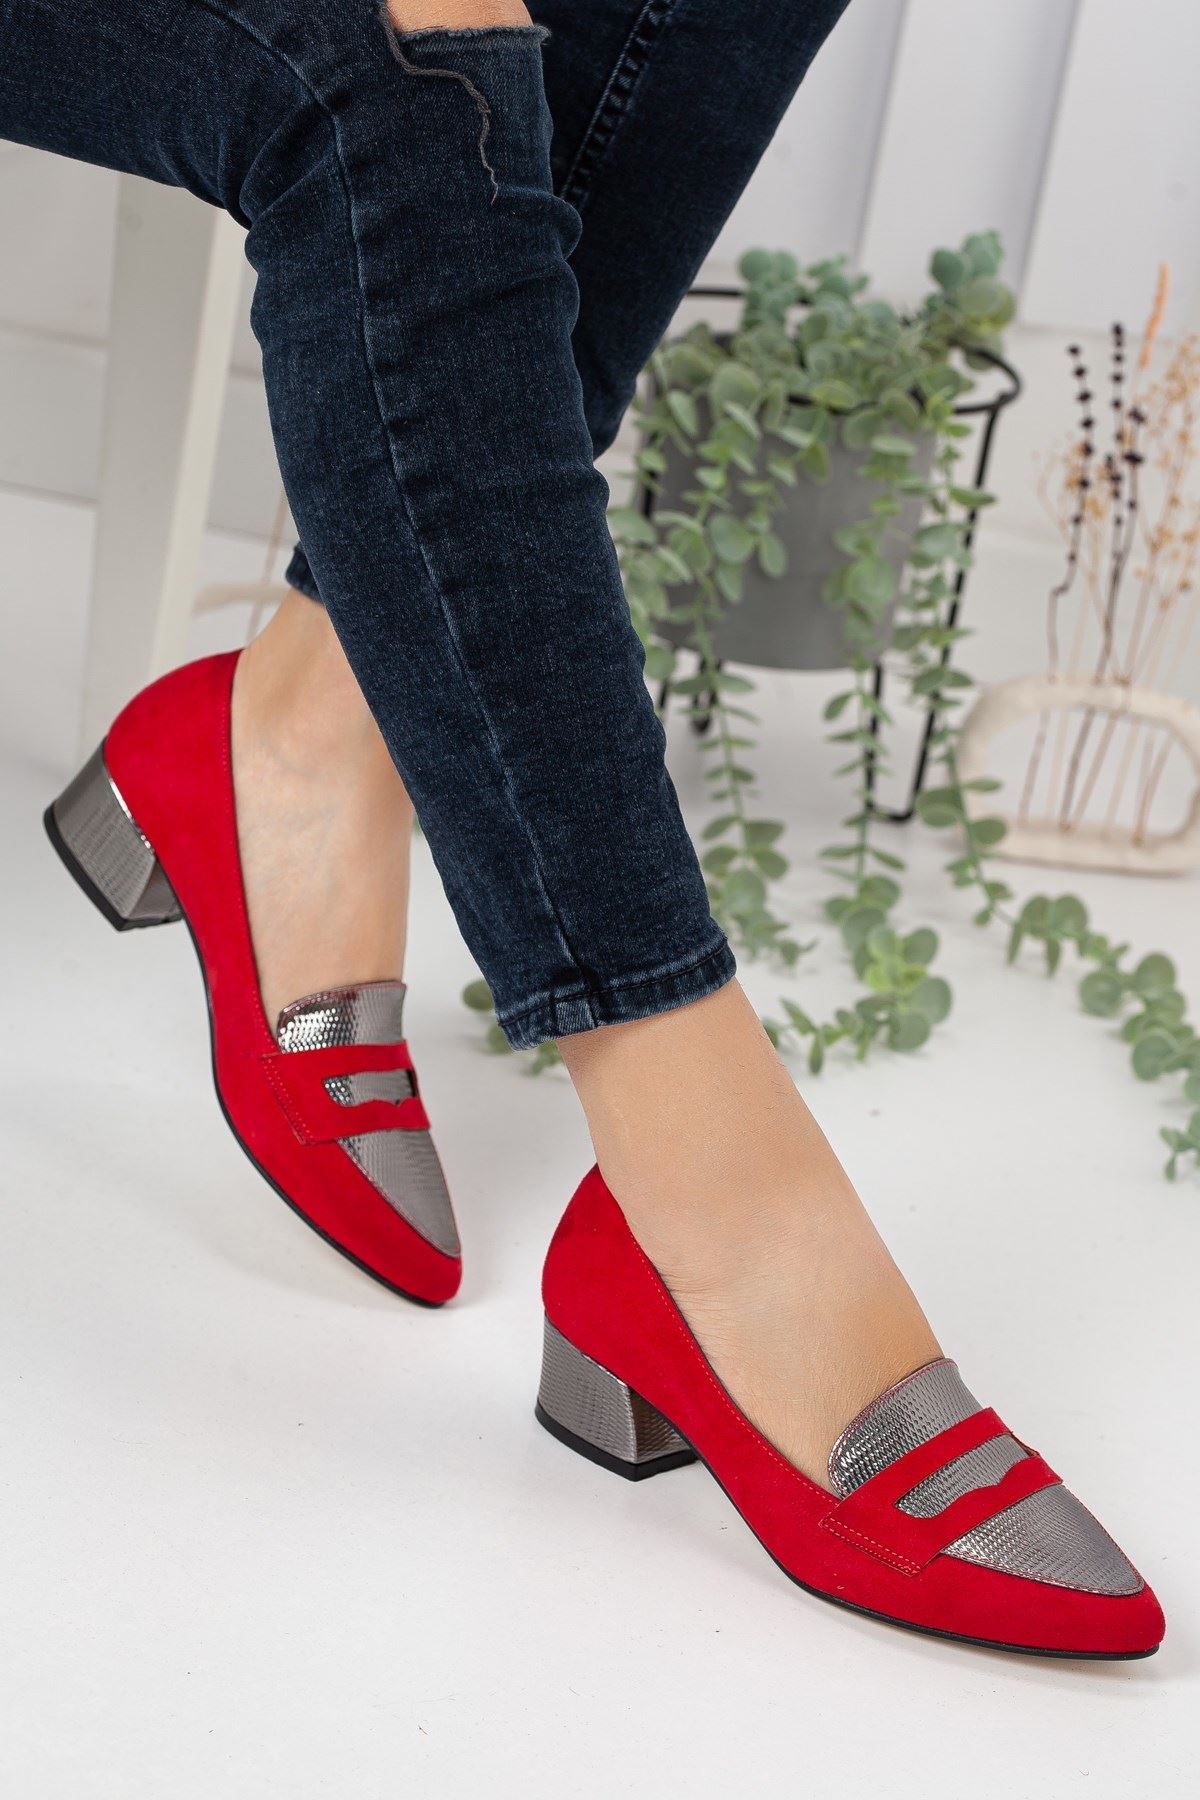 Mia Topuklu Kırmızı Süet Platin Detay Ayakkabı